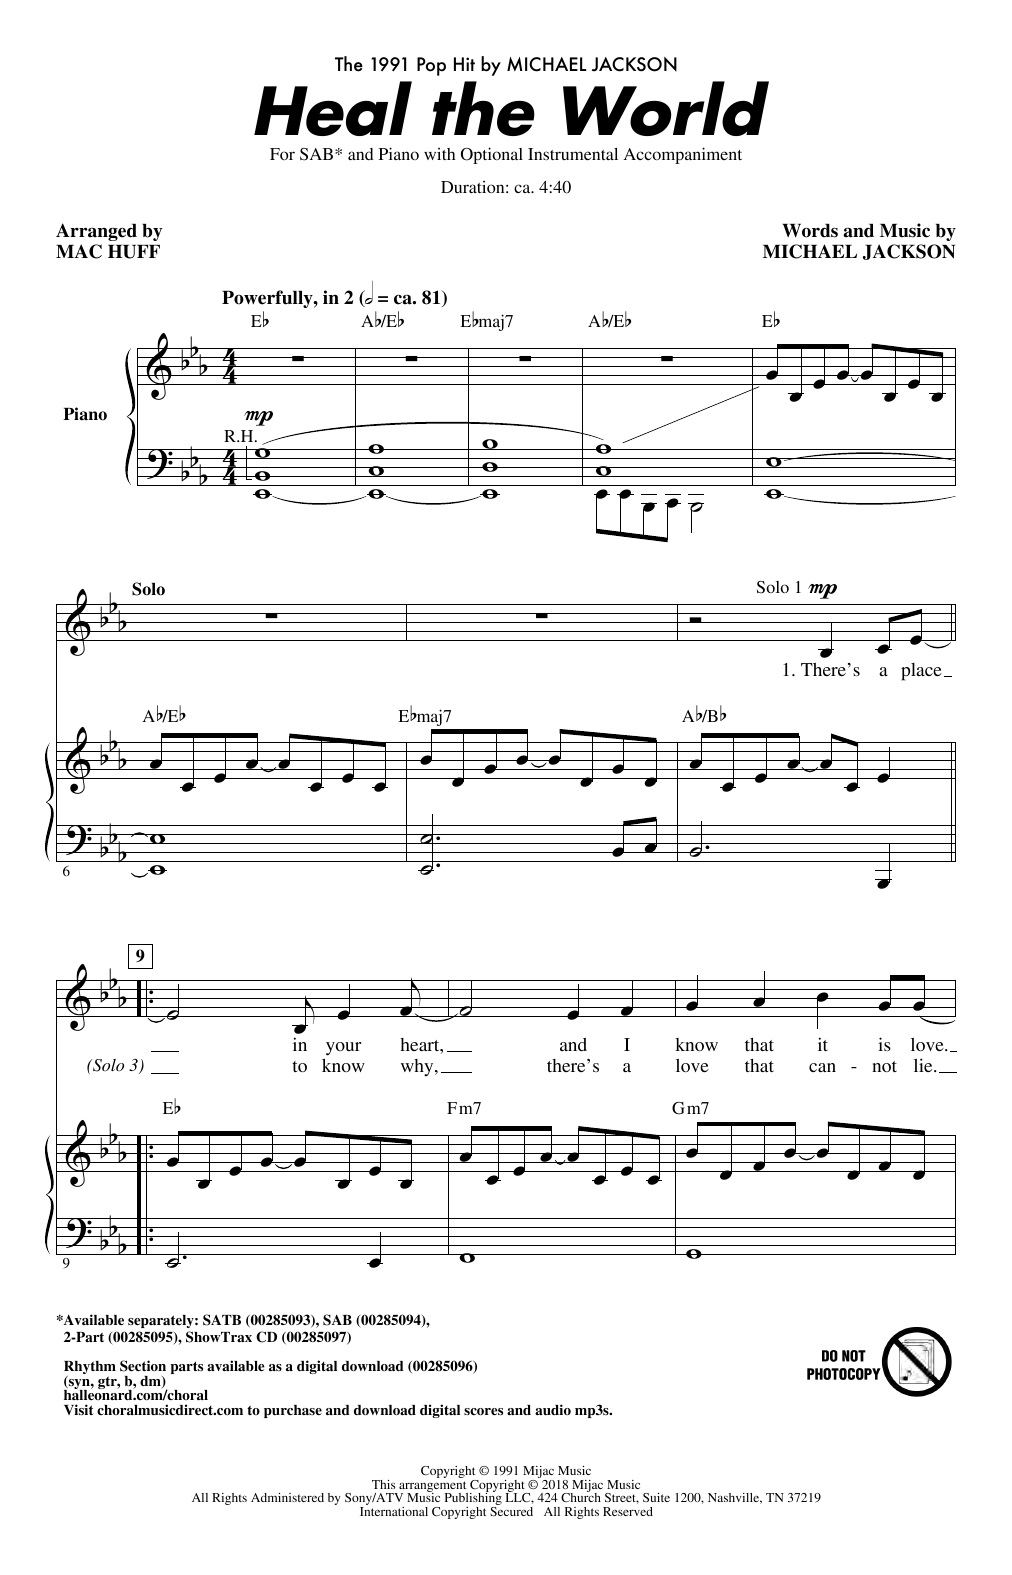 Michael Jackson Heal The World (Arr. Mac Huff) Sheet Music Notes & Chords for SATB Choir - Download or Print PDF